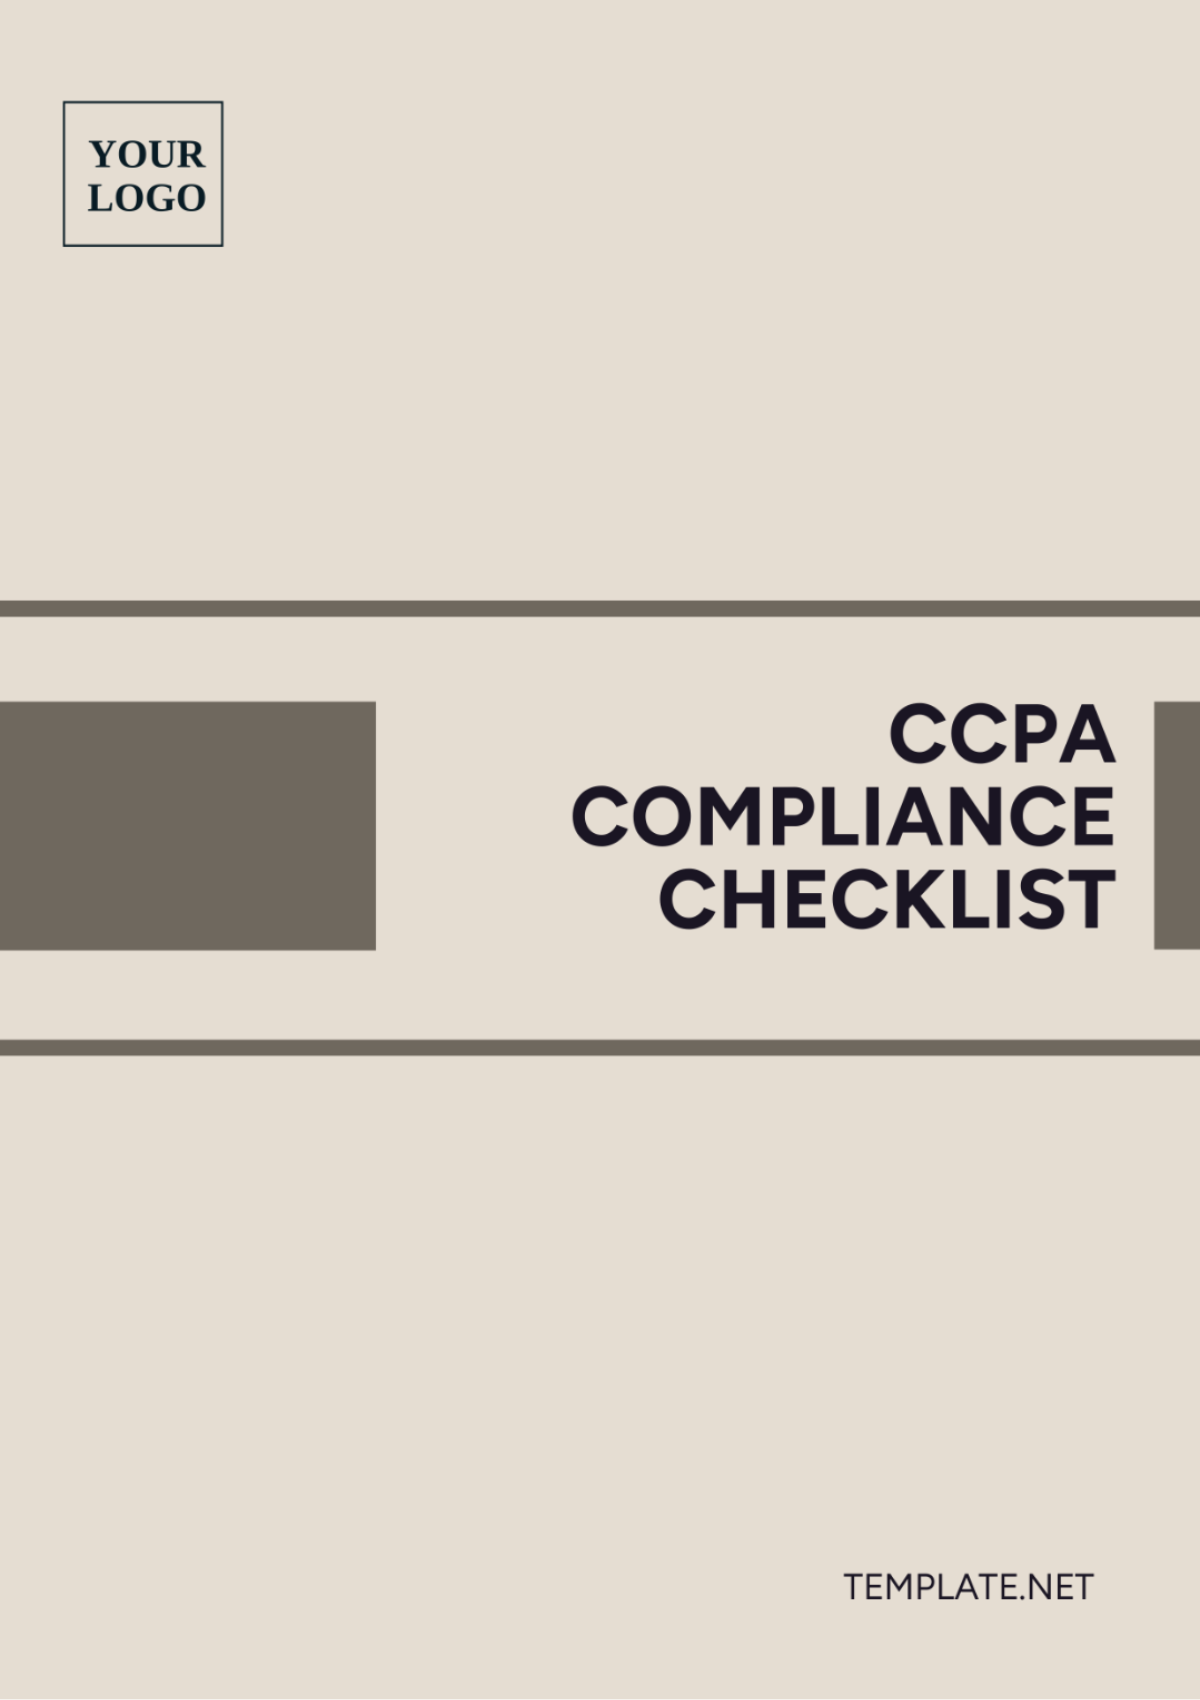 CCPA Compliance Checklist Template